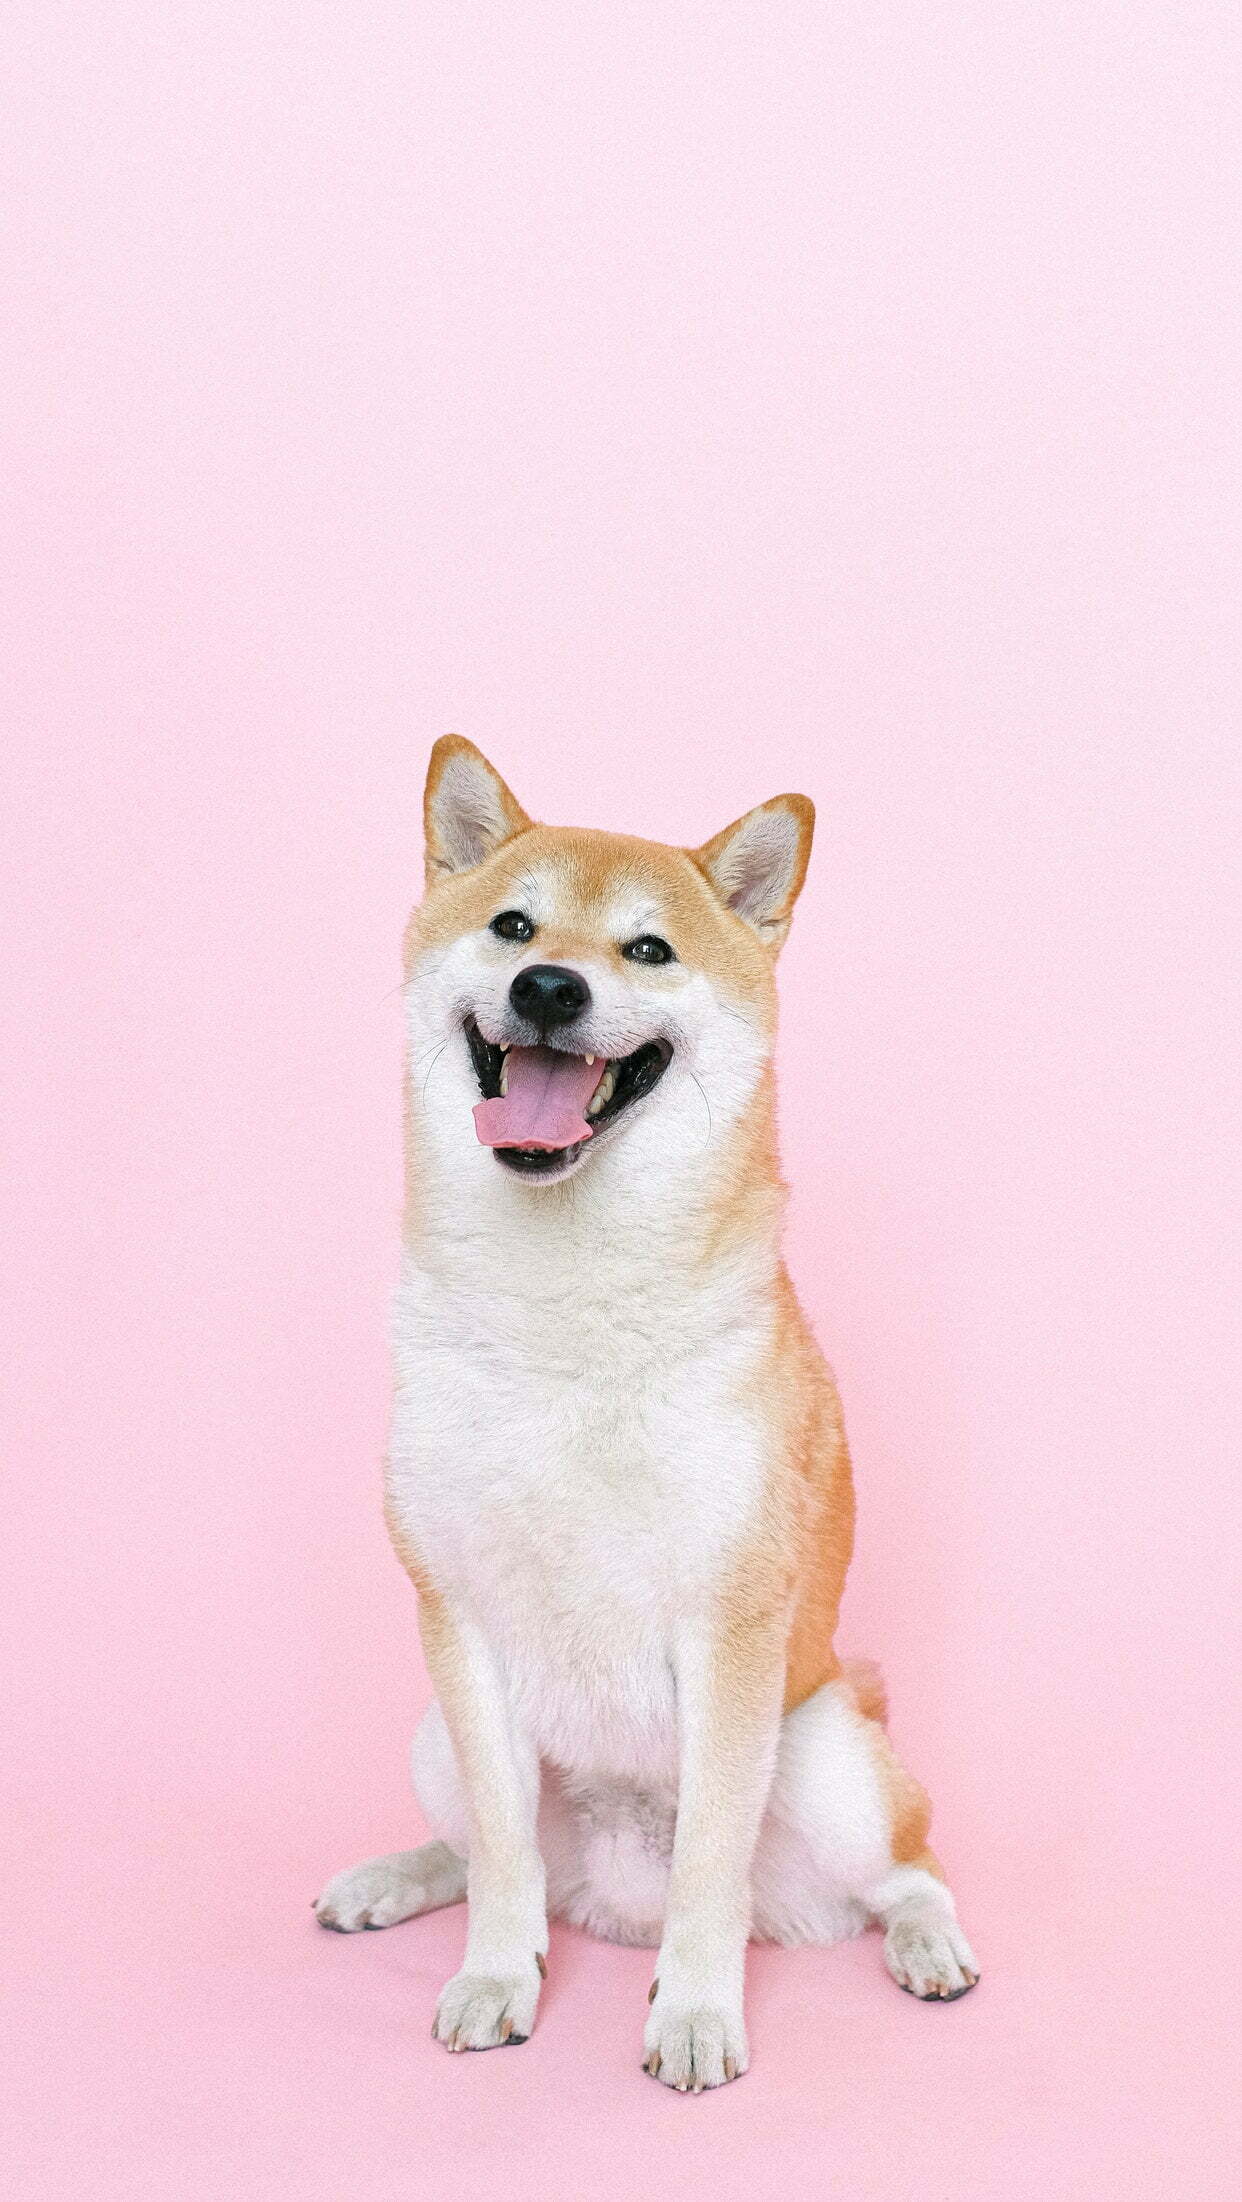 Cute dog wallpaper 4k iphone 12